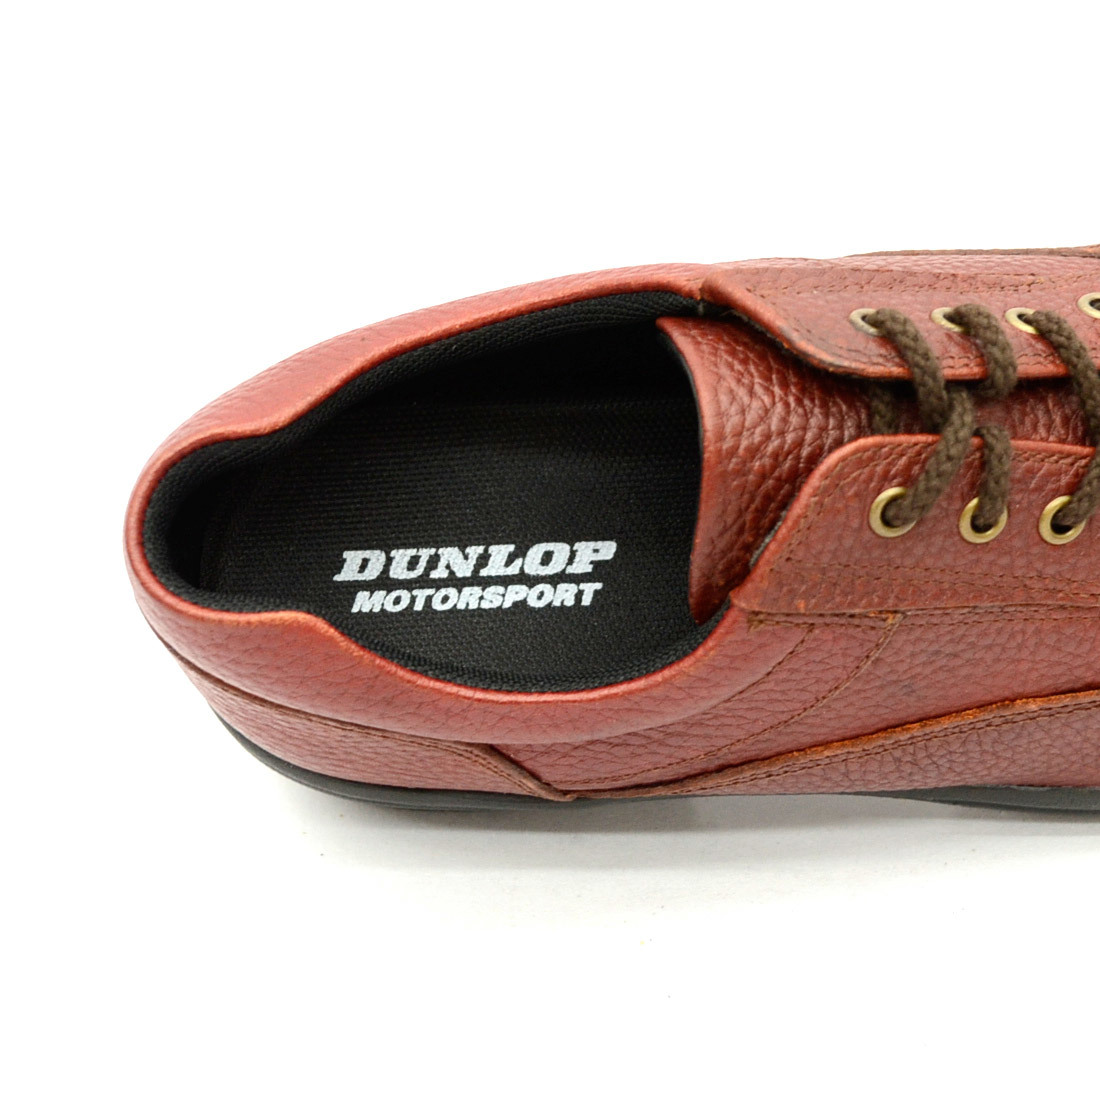 ^Dunlop Dunlop U chip casual shoes light weight DL-12 red Brown RedBrown 24.5cm (0910010270-rb-s245)